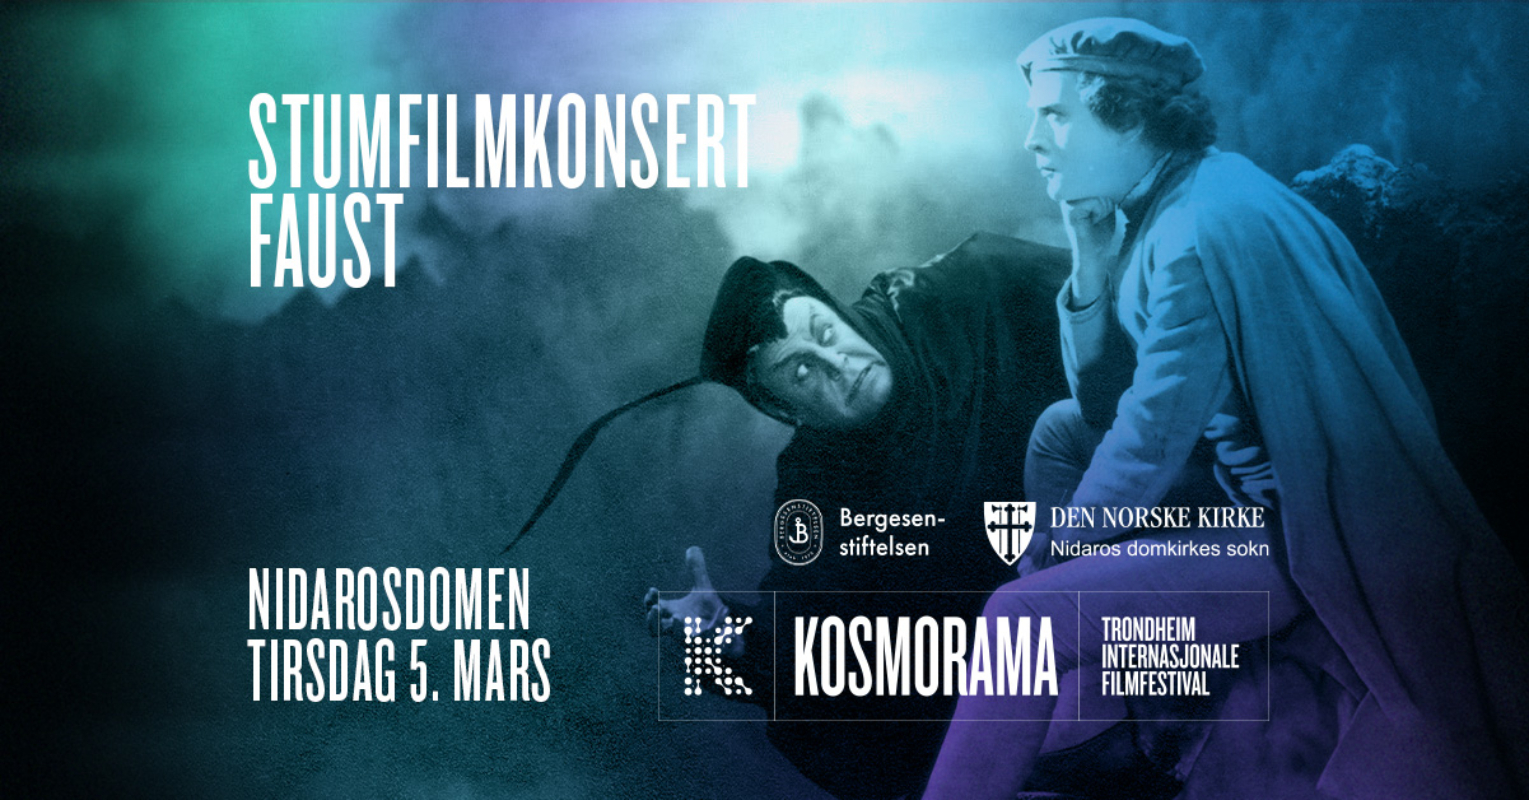 Stumfilmkonsert // Faust i Nidarosdomen 5. mars